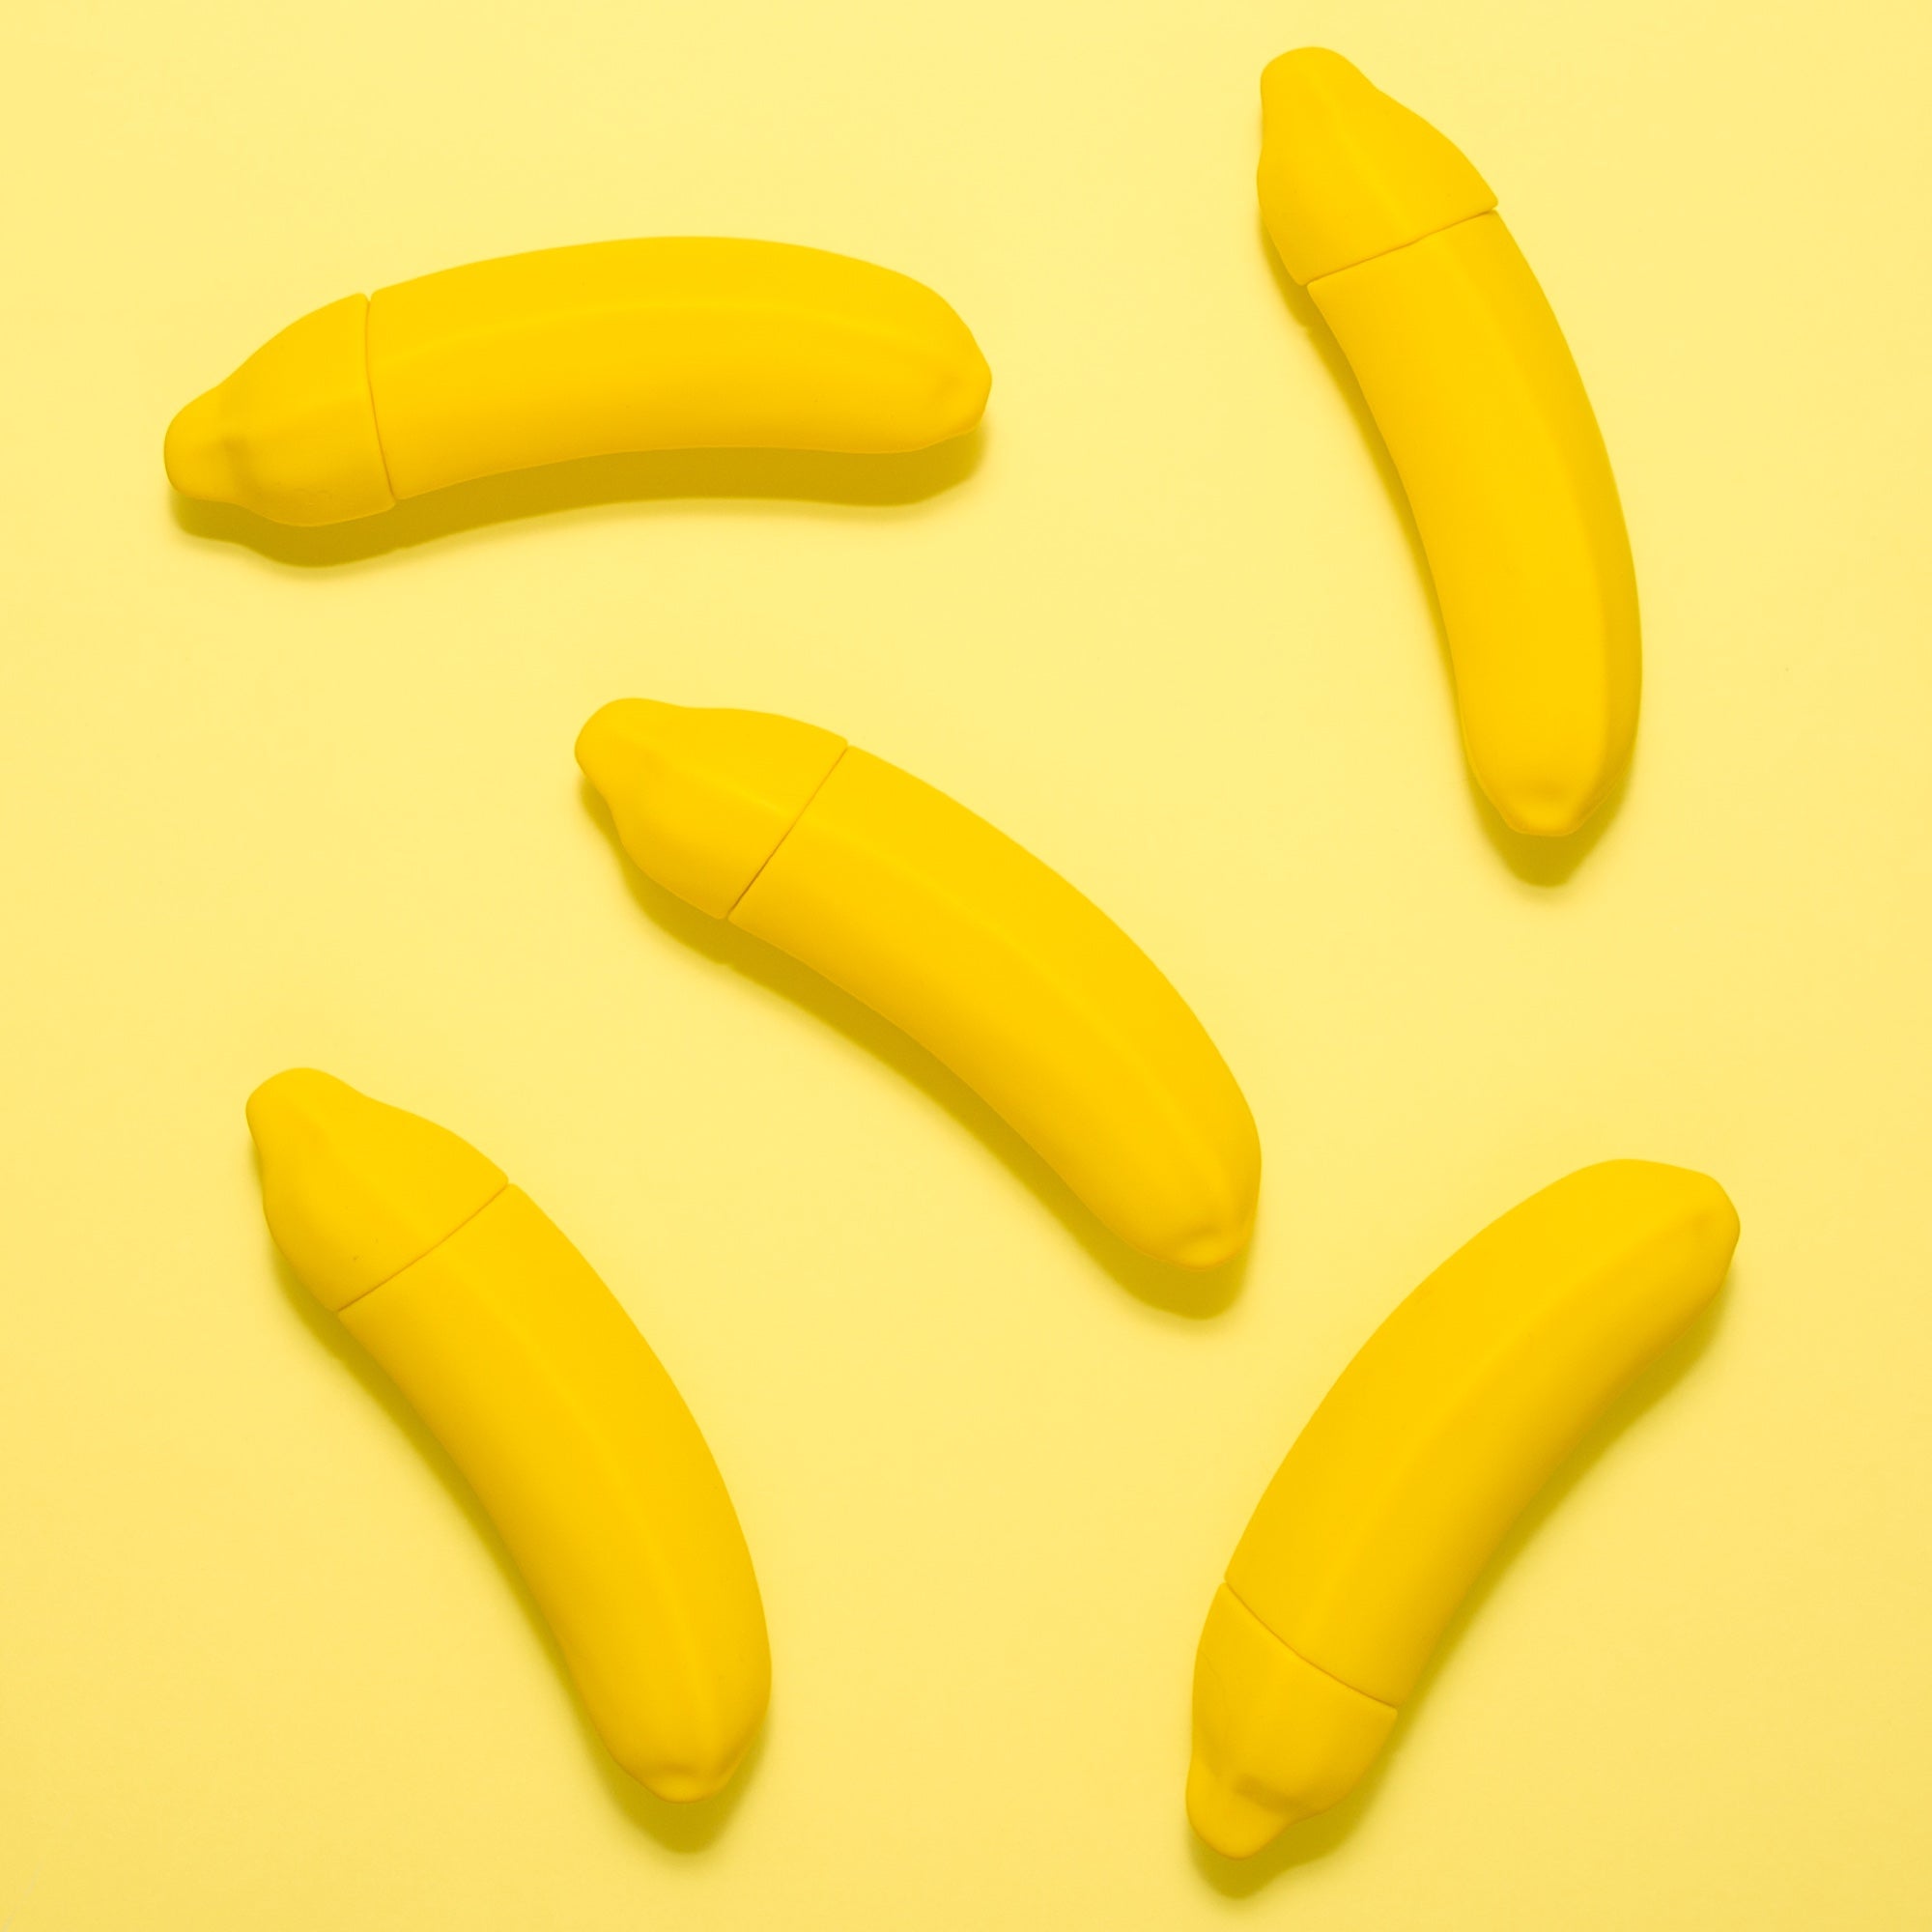 Five banana vibrators lay on a yellow background